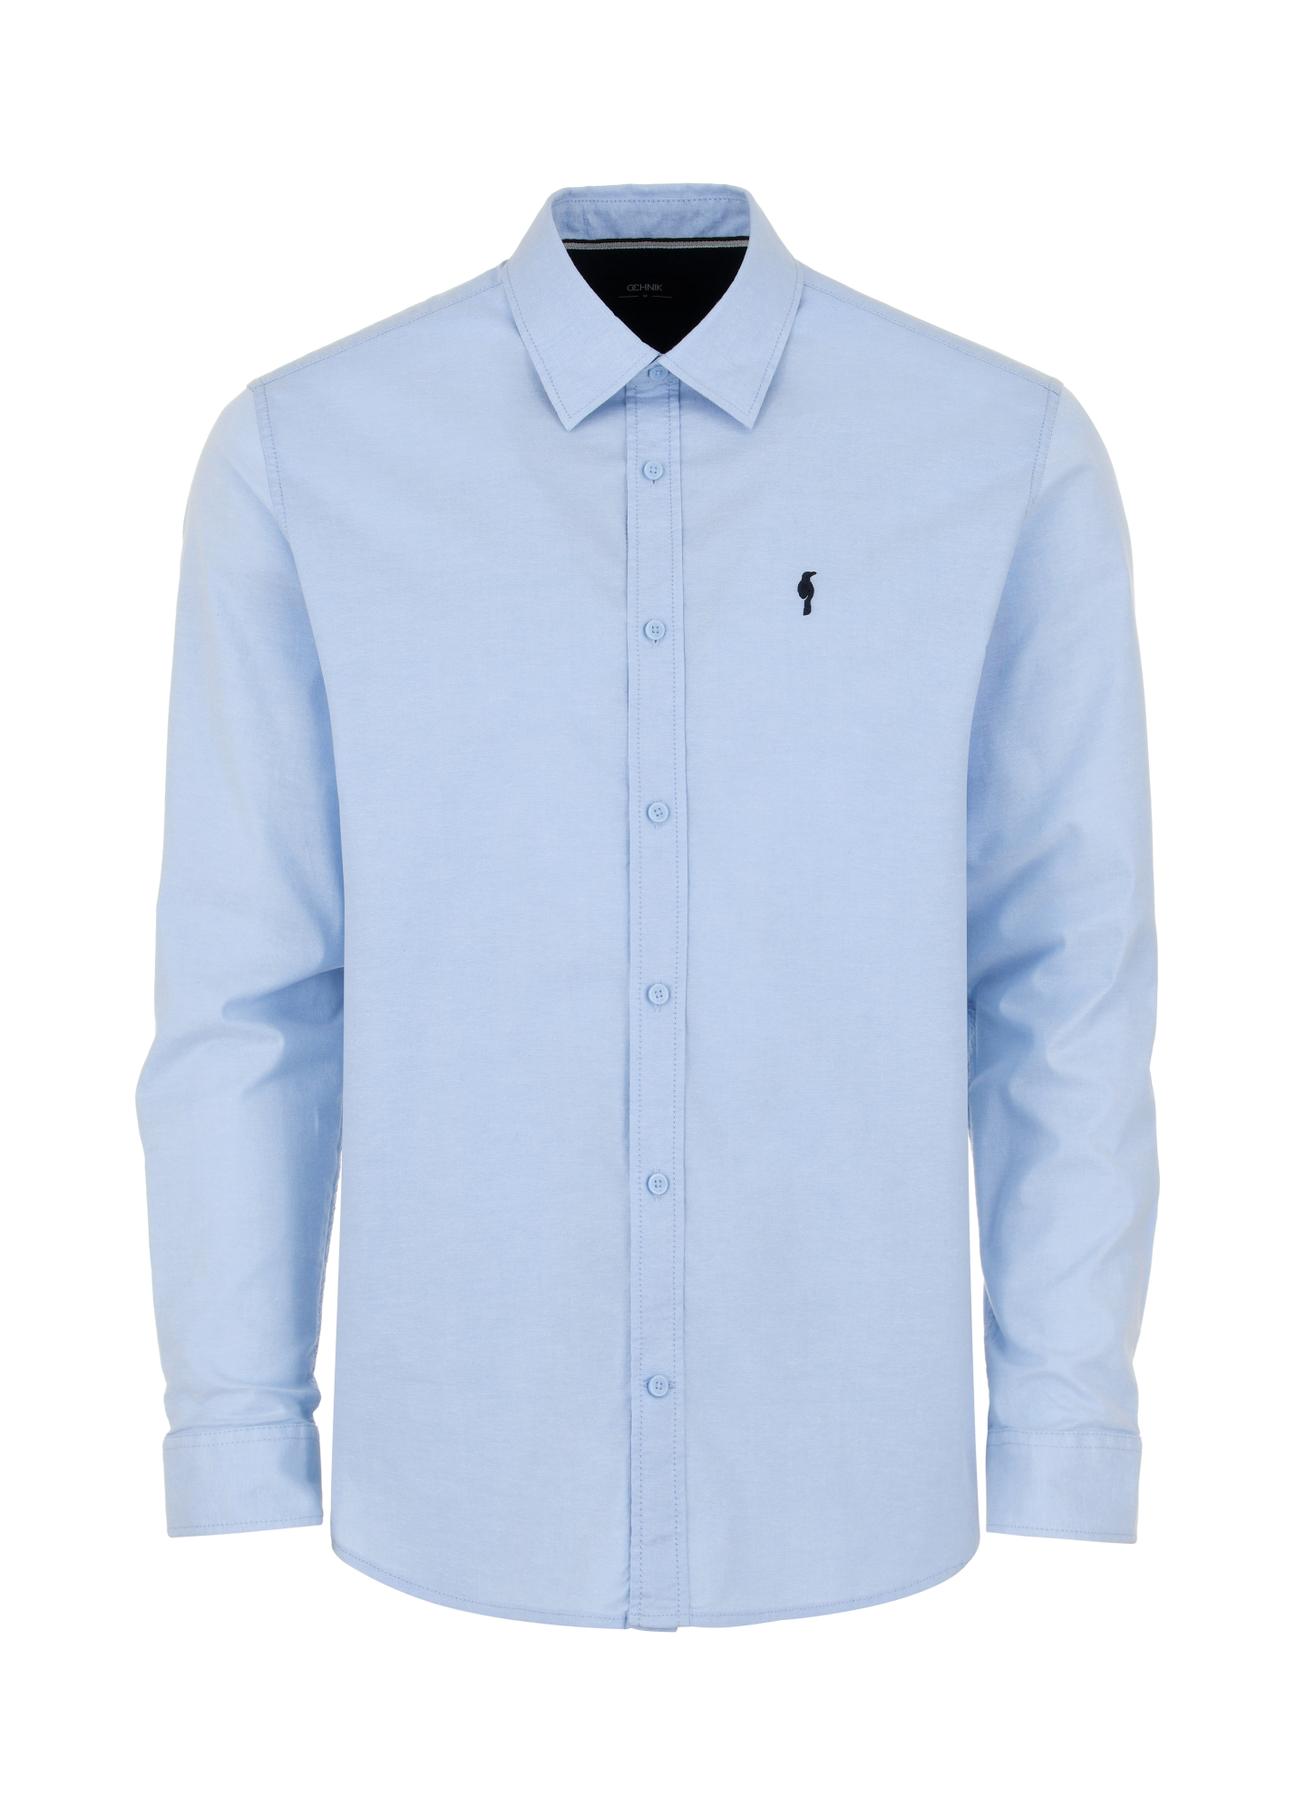 Błękitna koszula męska KOSMT-0323-60(W24)